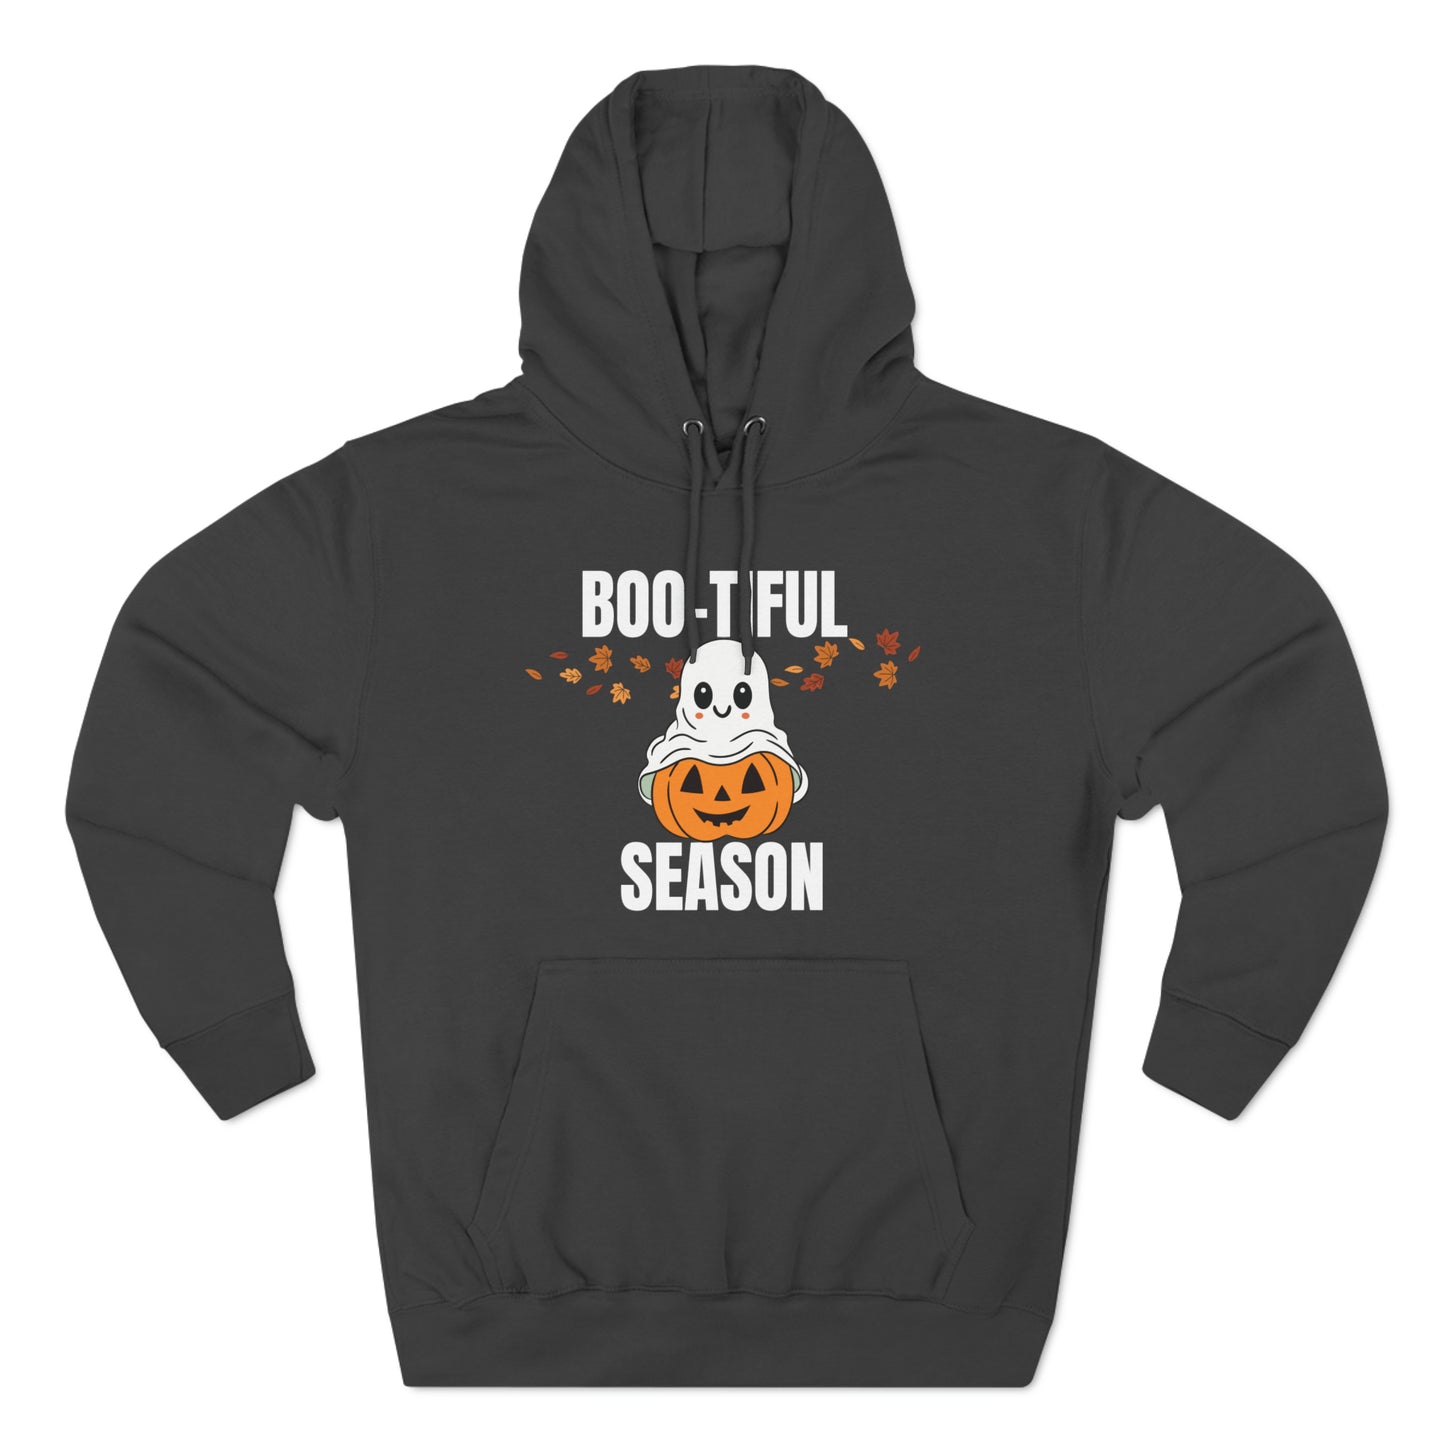 Charcoal Heather Hoodie Hoodie Halloween Sweatshirt for Spooky Hoodies Outfits this Fall Petrova Designs